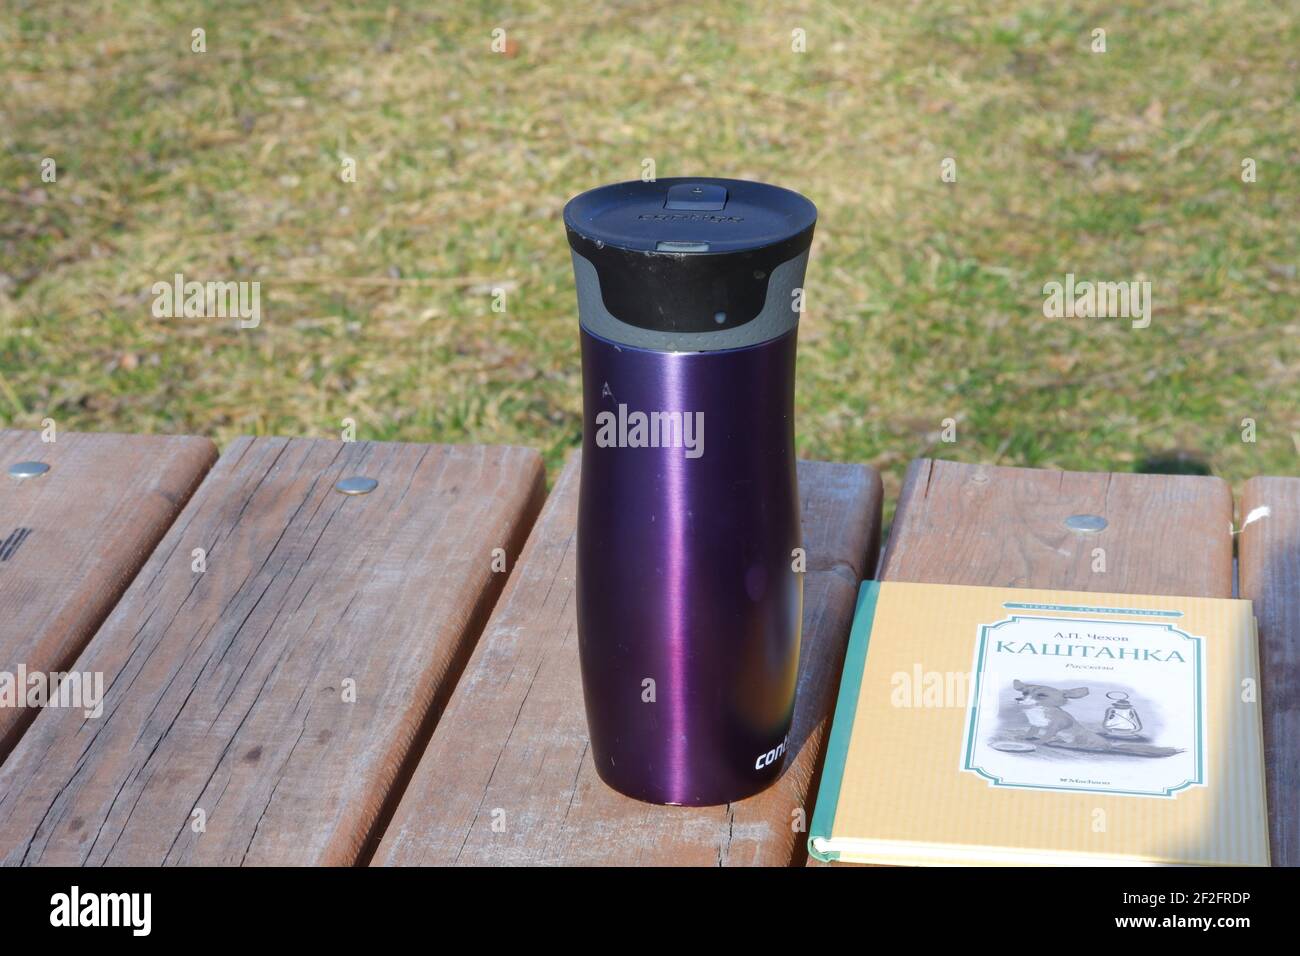 Navy Blue Thermo Mug and Book Outdoor- Anton Chekhov Каштанка Stock Photo